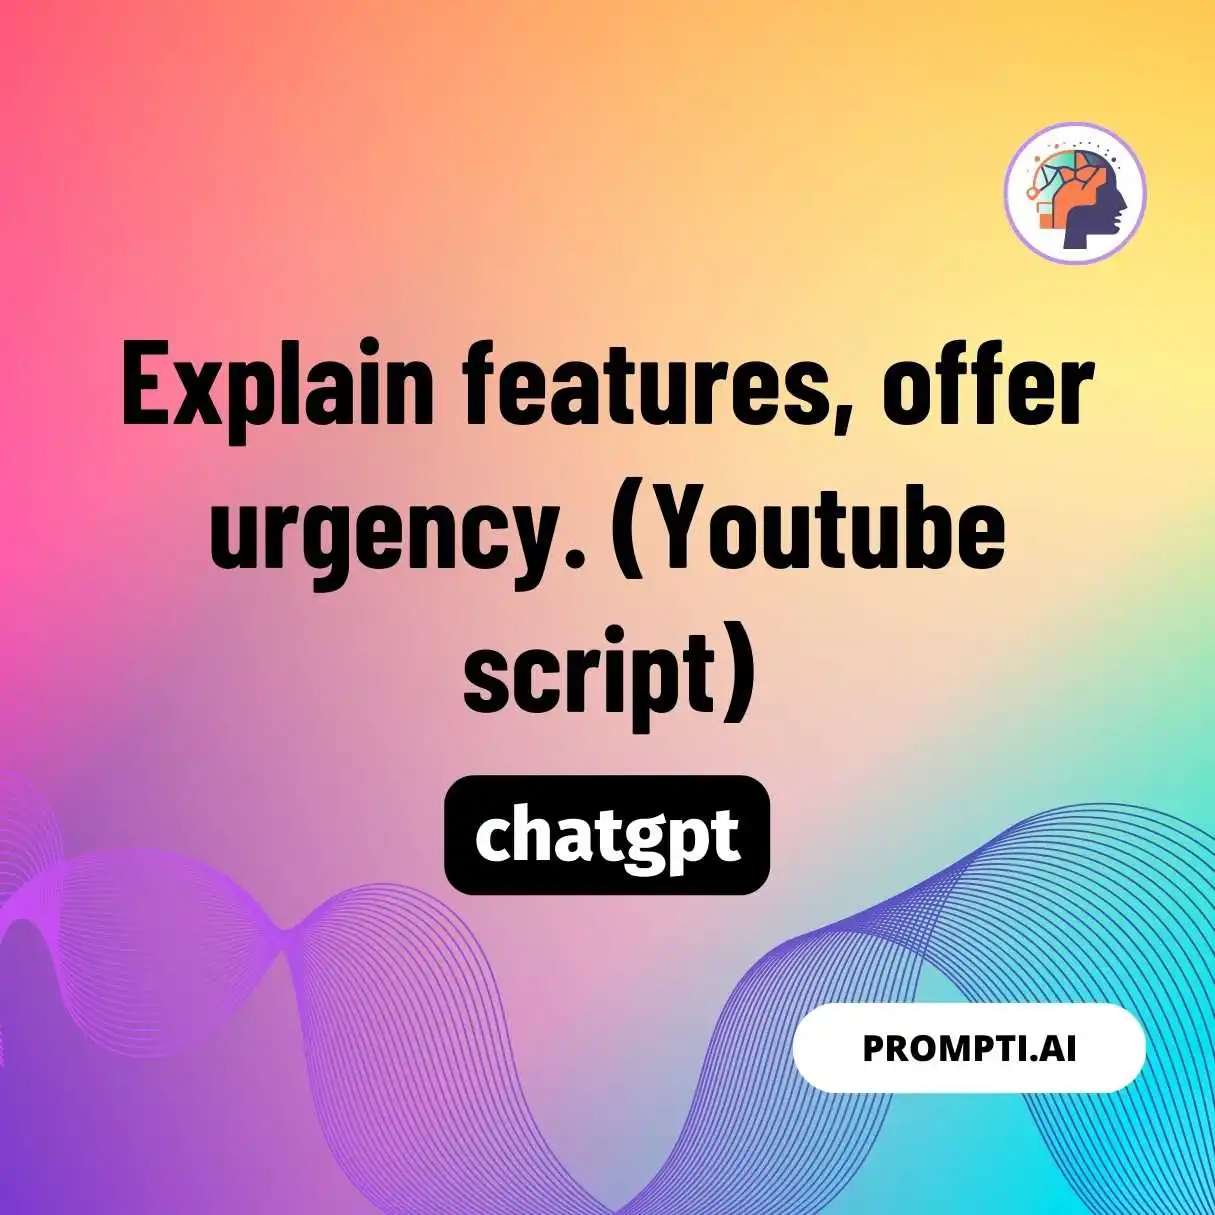 Explain features, offer urgency. (Youtube script)